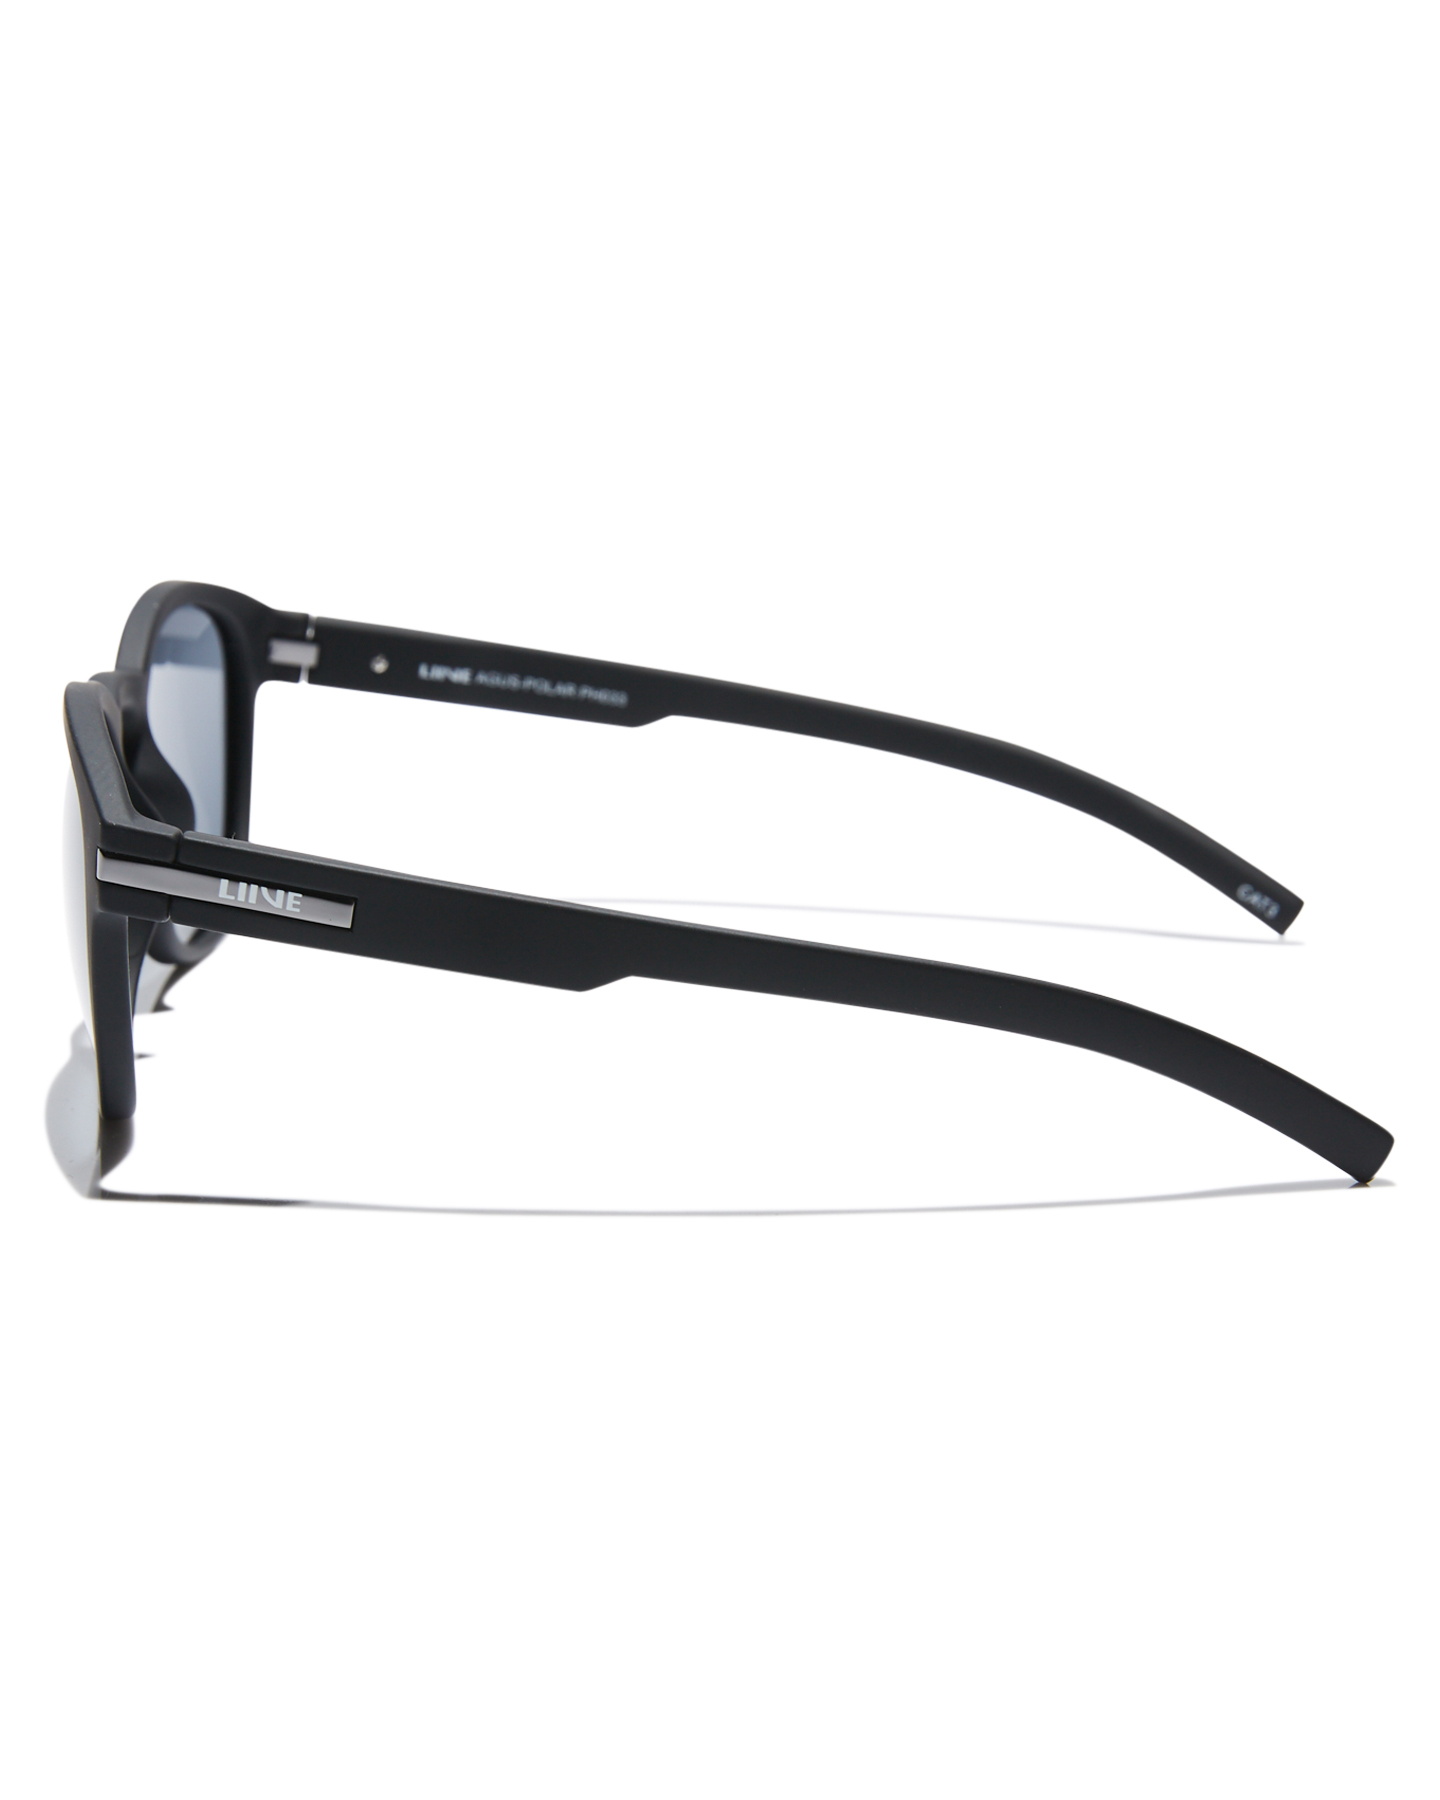 Liive Vision Agus Polarised Sunglasses - Matte Black | SurfStitch